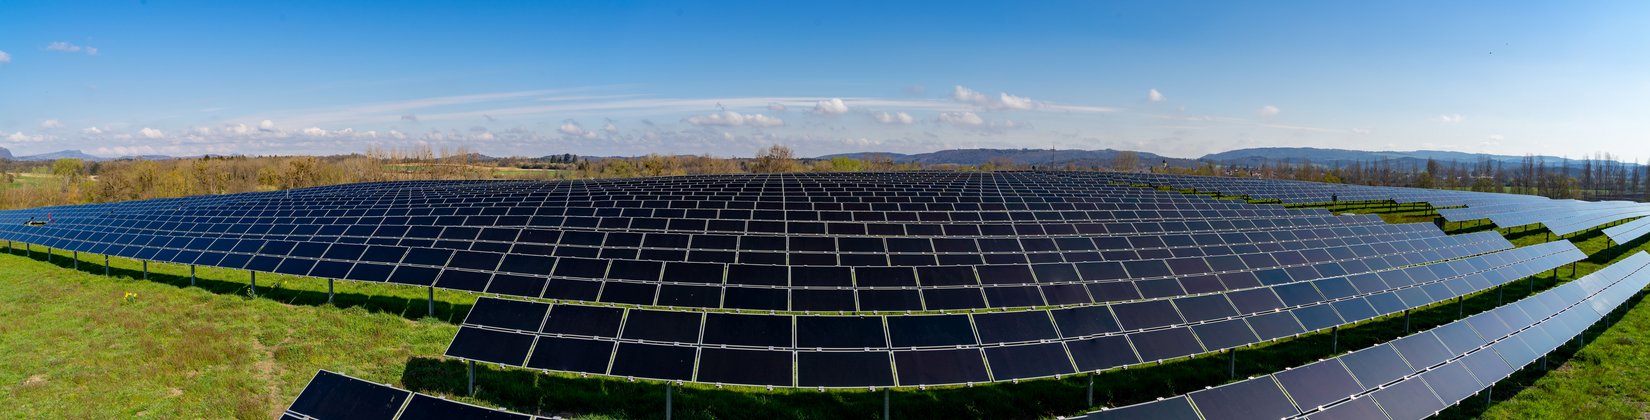 Solarpark Rickelshausen ©Plattform EE BW, A. Jung